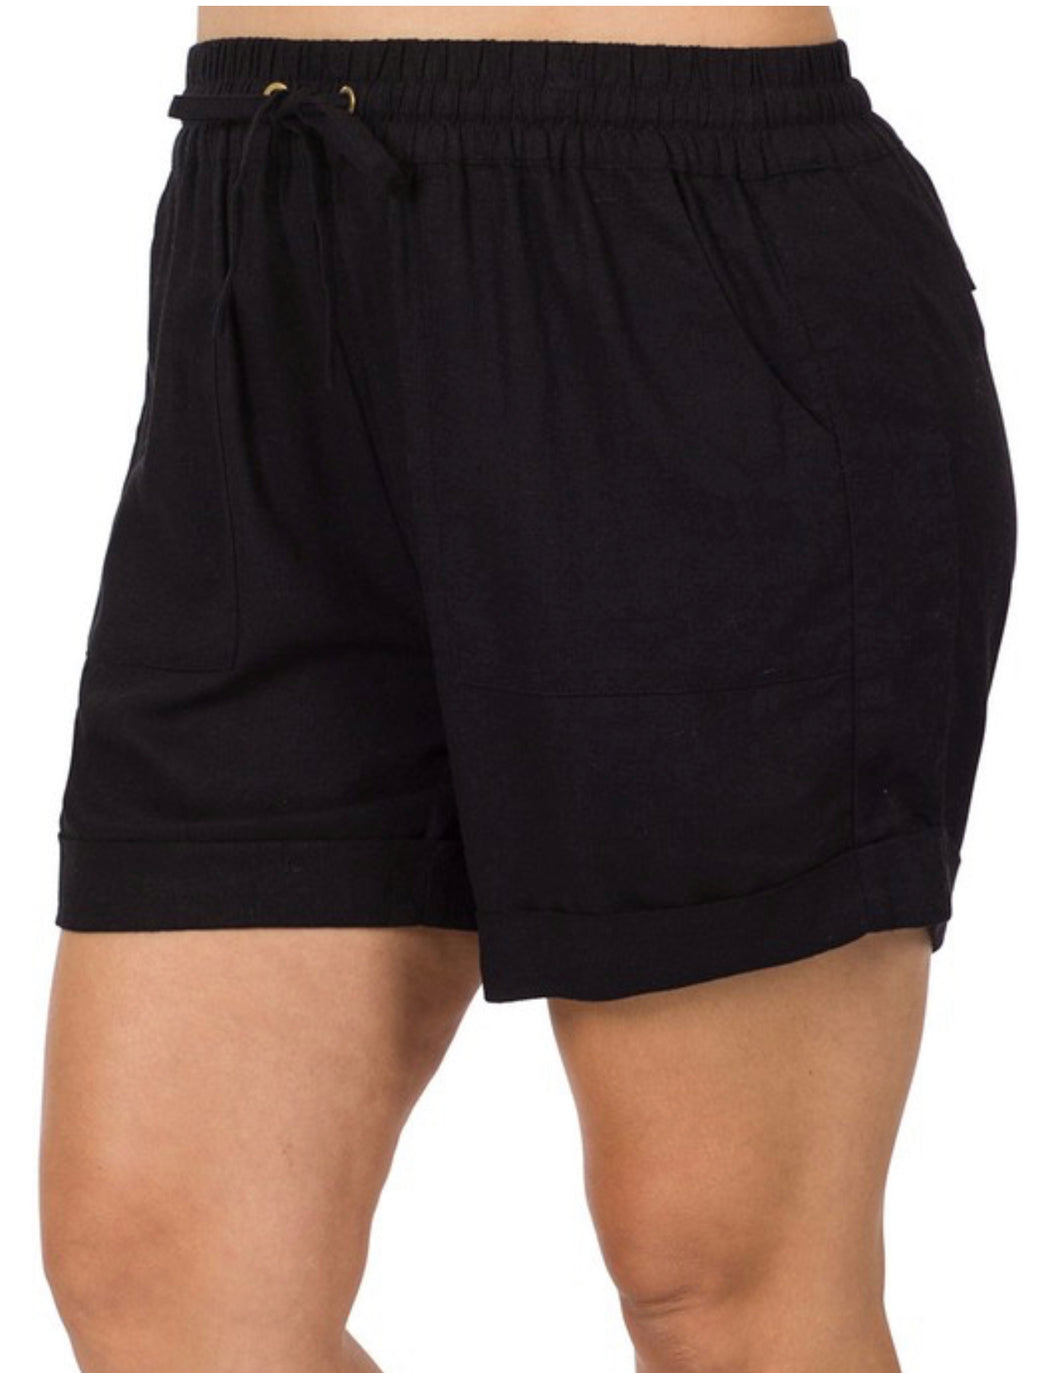 Linen drawstring shorts in plus size